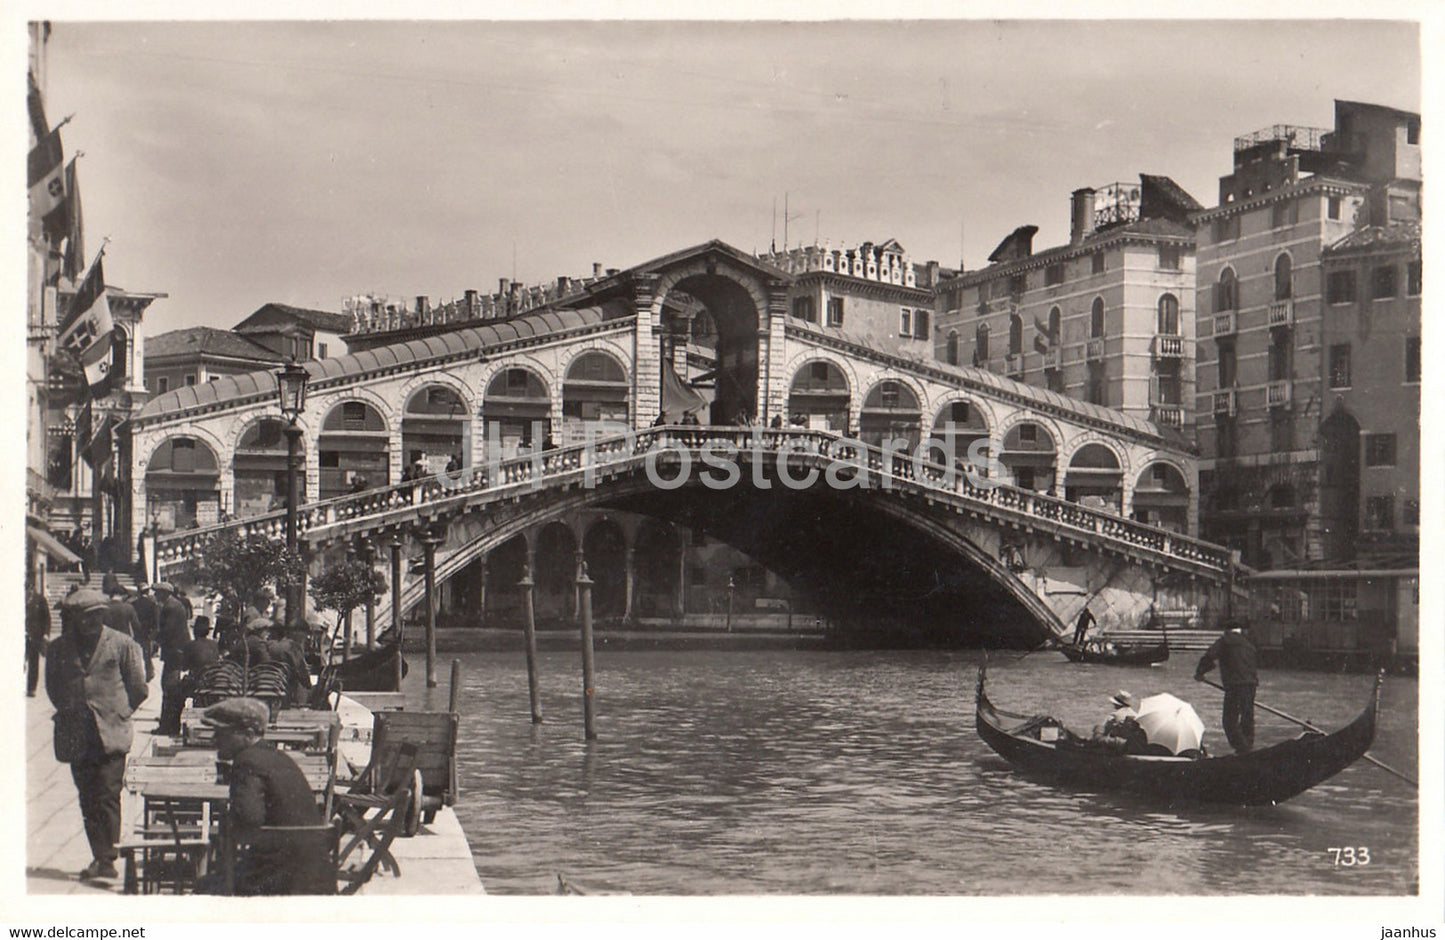 Venezia - Vendig - Venice - Ponte di Rialto - 733 - old postcard - Italy - unused - JH Postcards